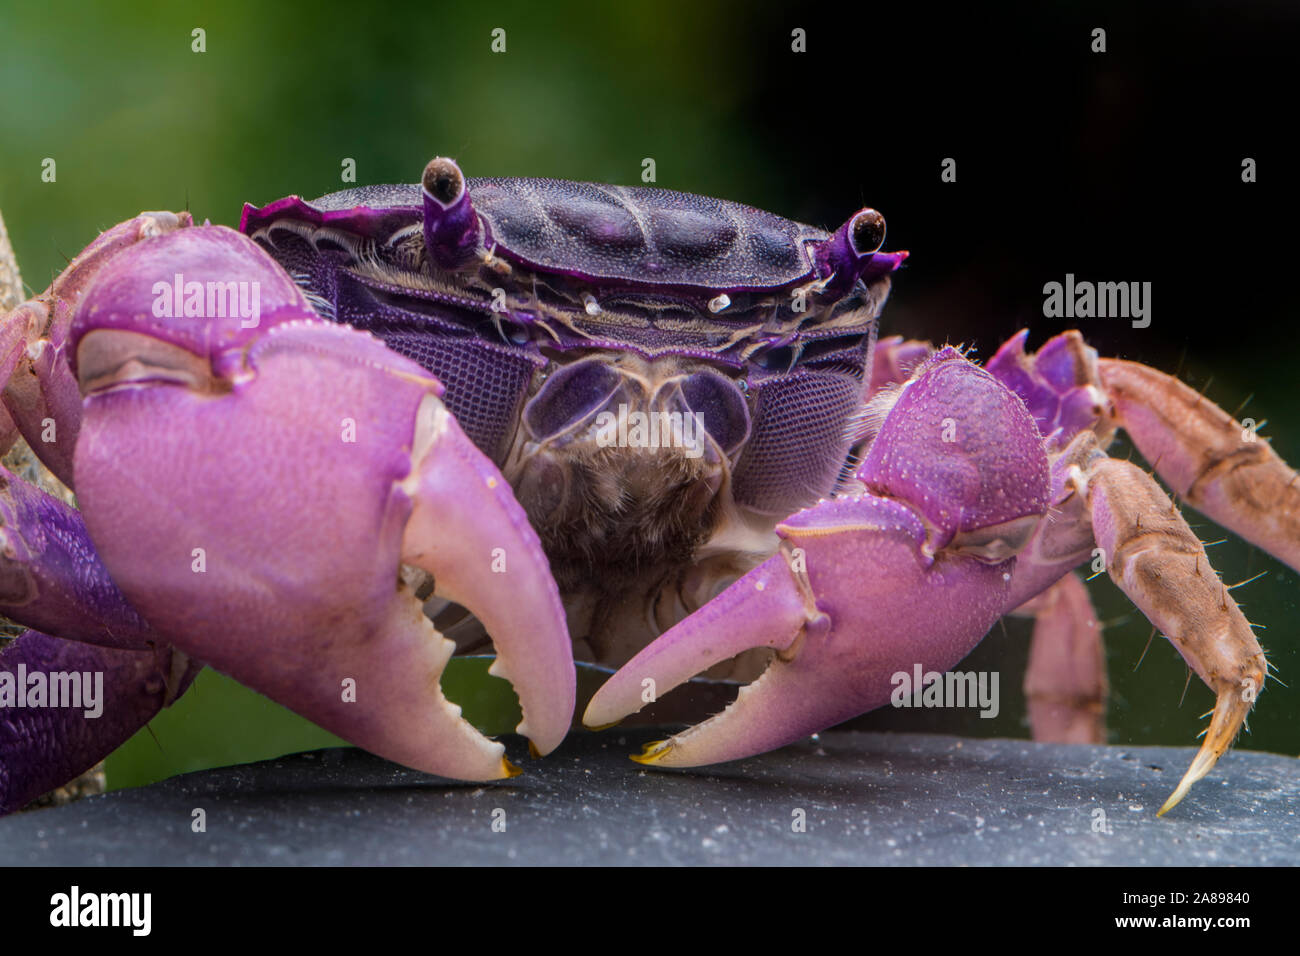 Neosarmatium sp. Purple,Spinnenkrabbe,Spider Crab Stock Photo